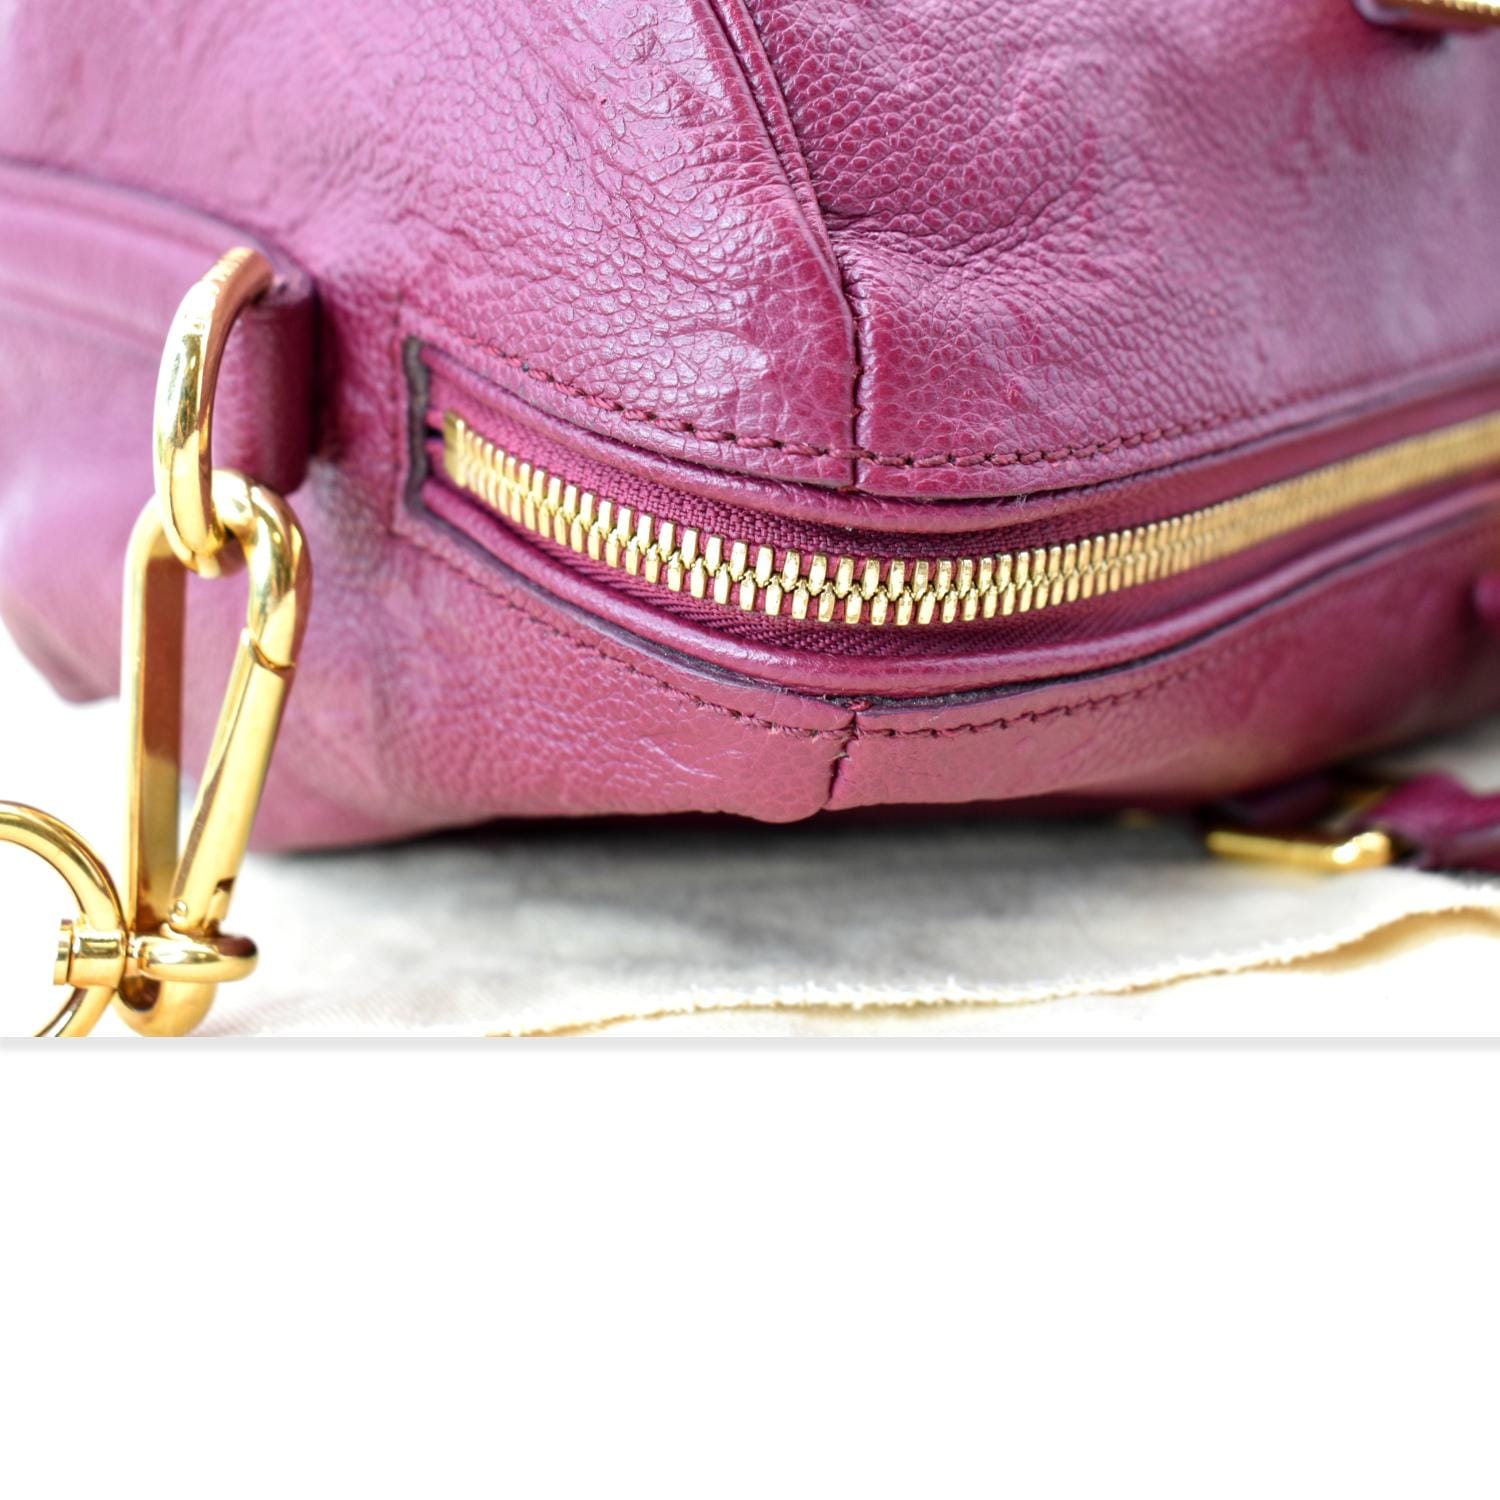 Louis Vuitton - Authenticated Speedy Bandoulière Handbag - Leather Burgundy Plain for Women, Very Good Condition